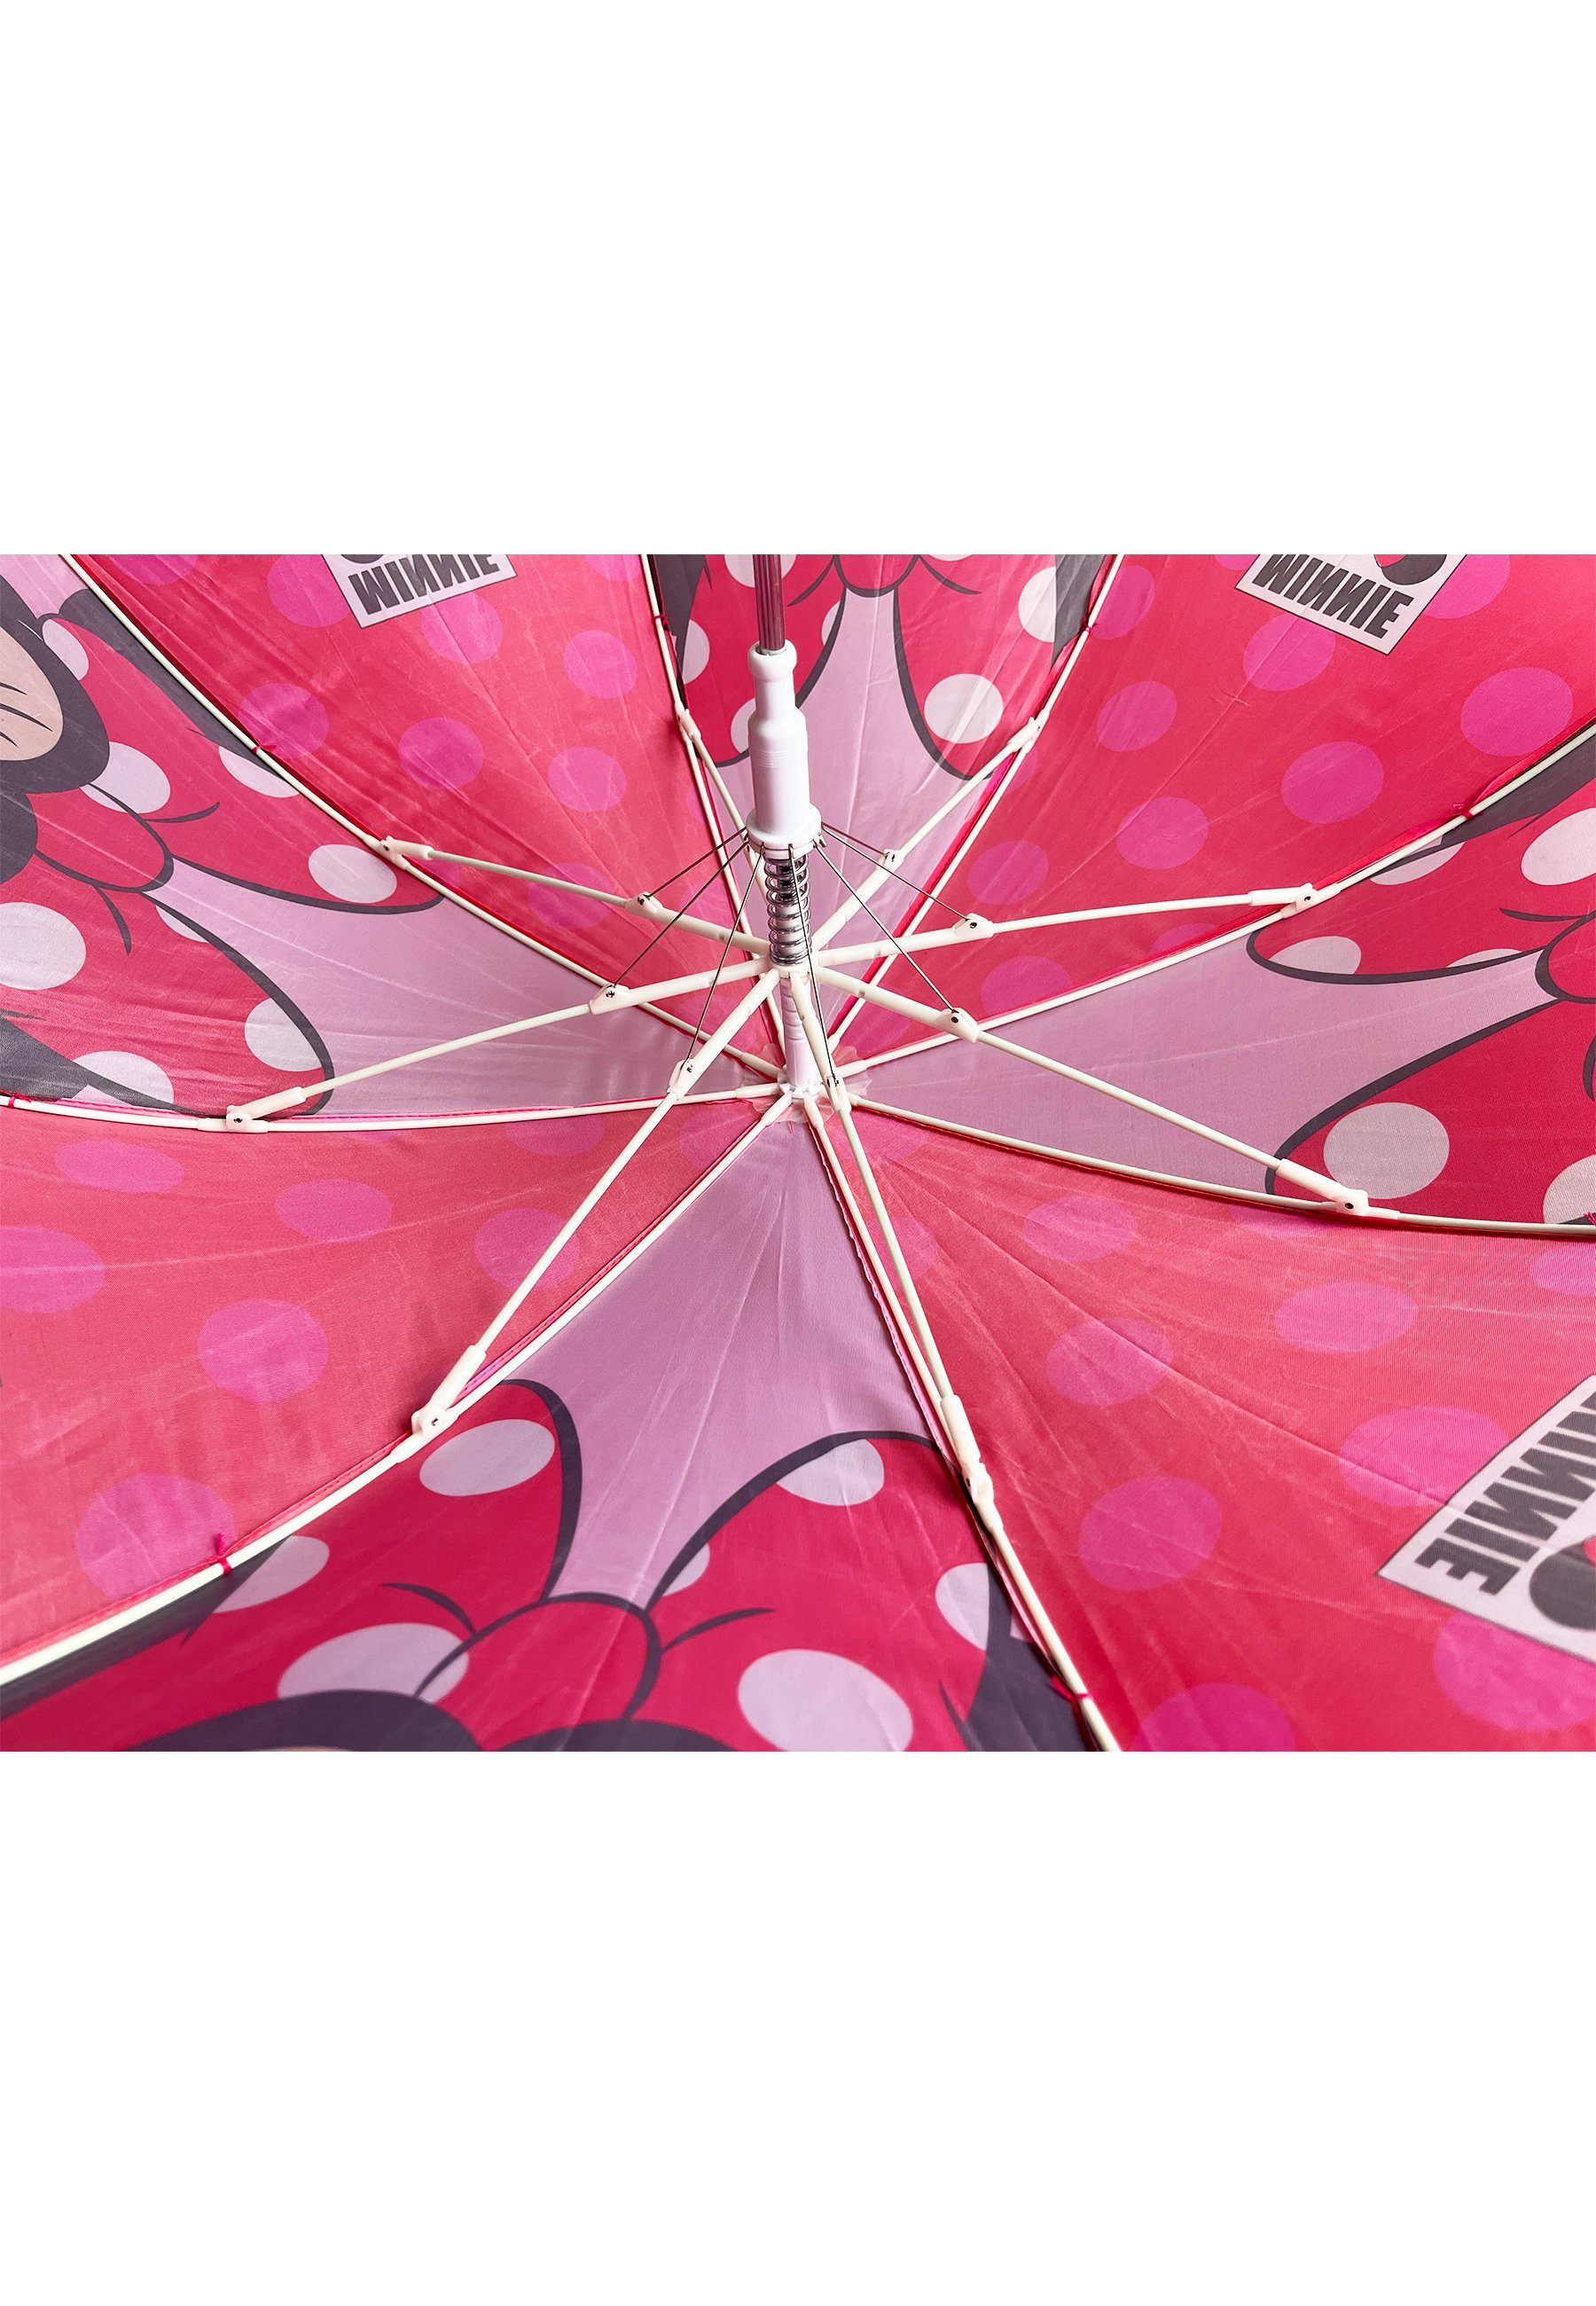 Disney Minnie Mouse Stockregenschirm Kinder Stock-Schirm Kuppelschirm Regenschirm